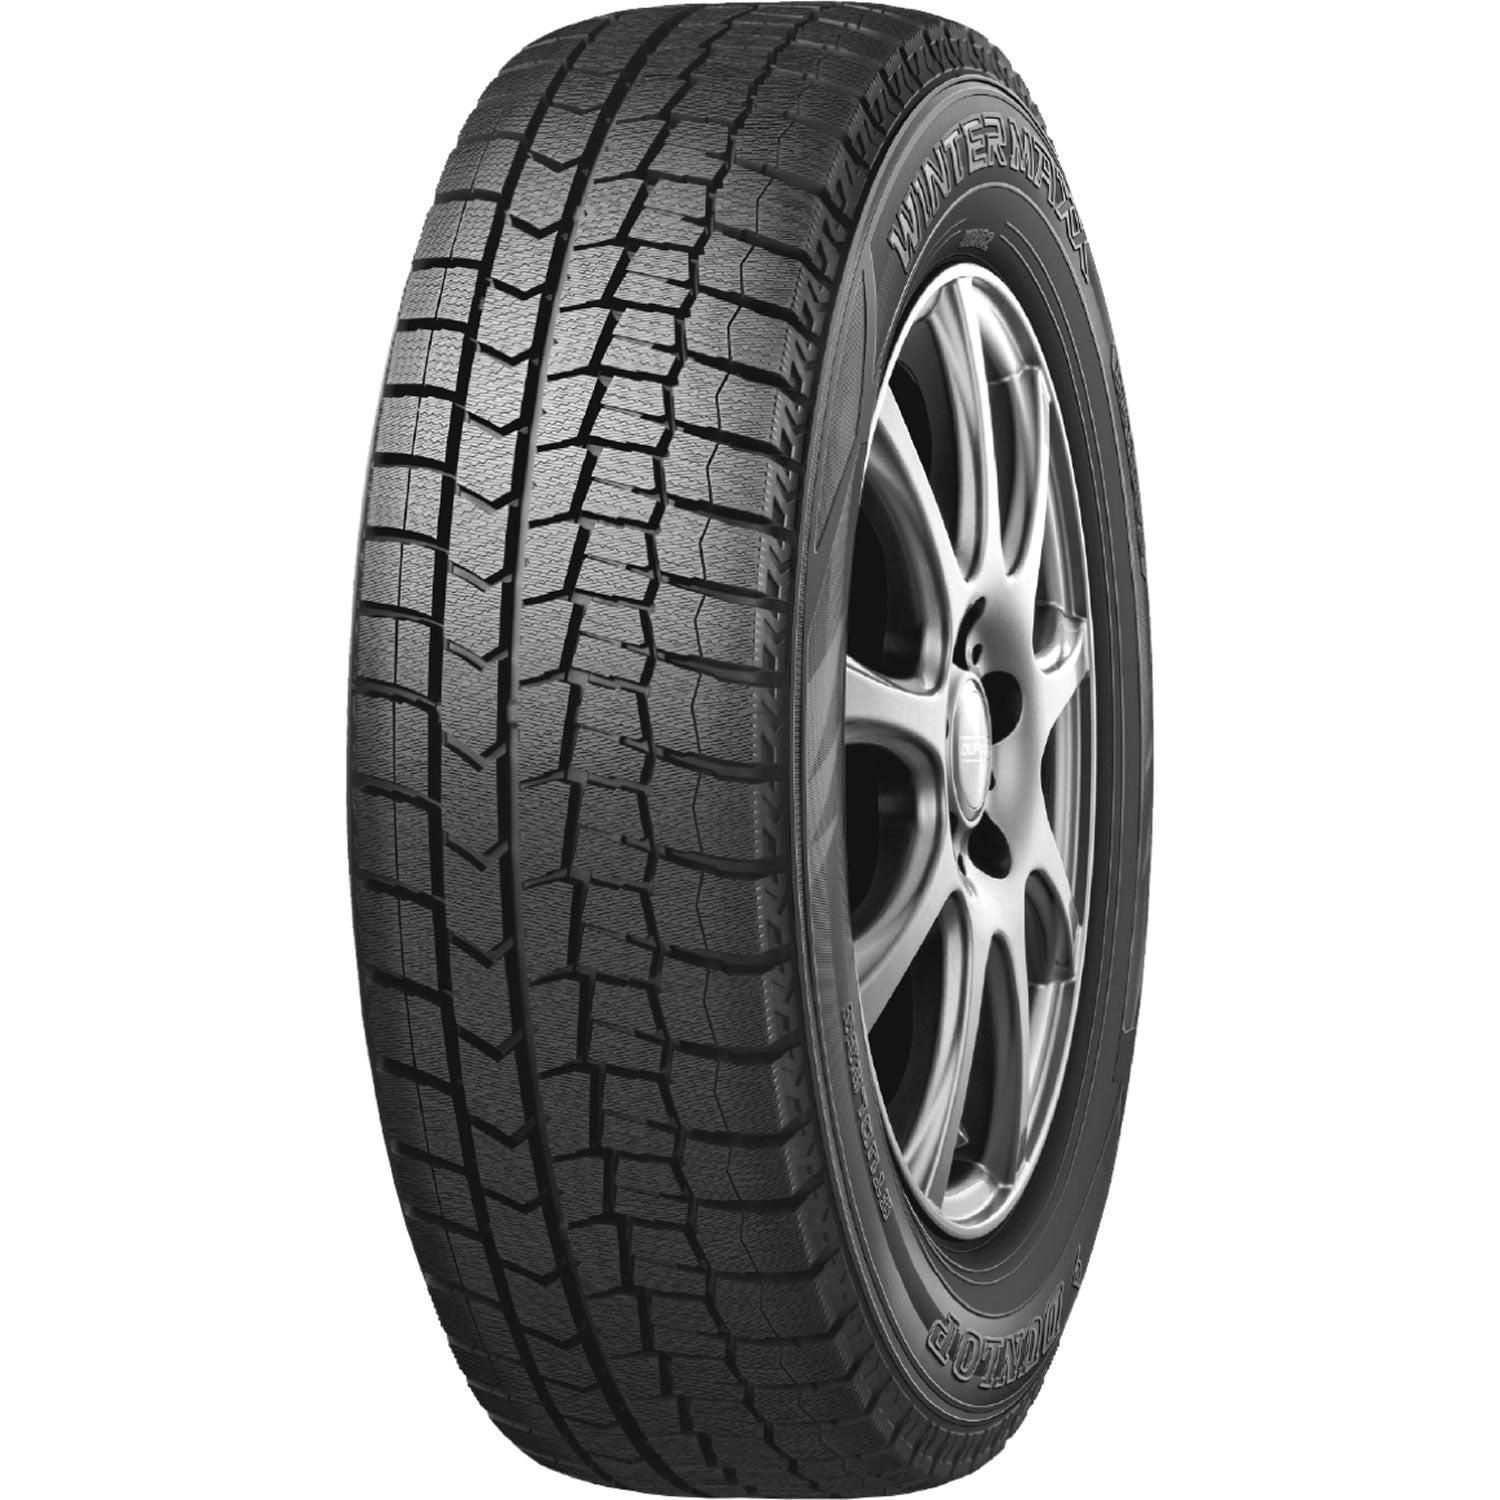 DUNLOP WINTER MAXX 2 215/55R16 (25.3X8.9R 16) Tires